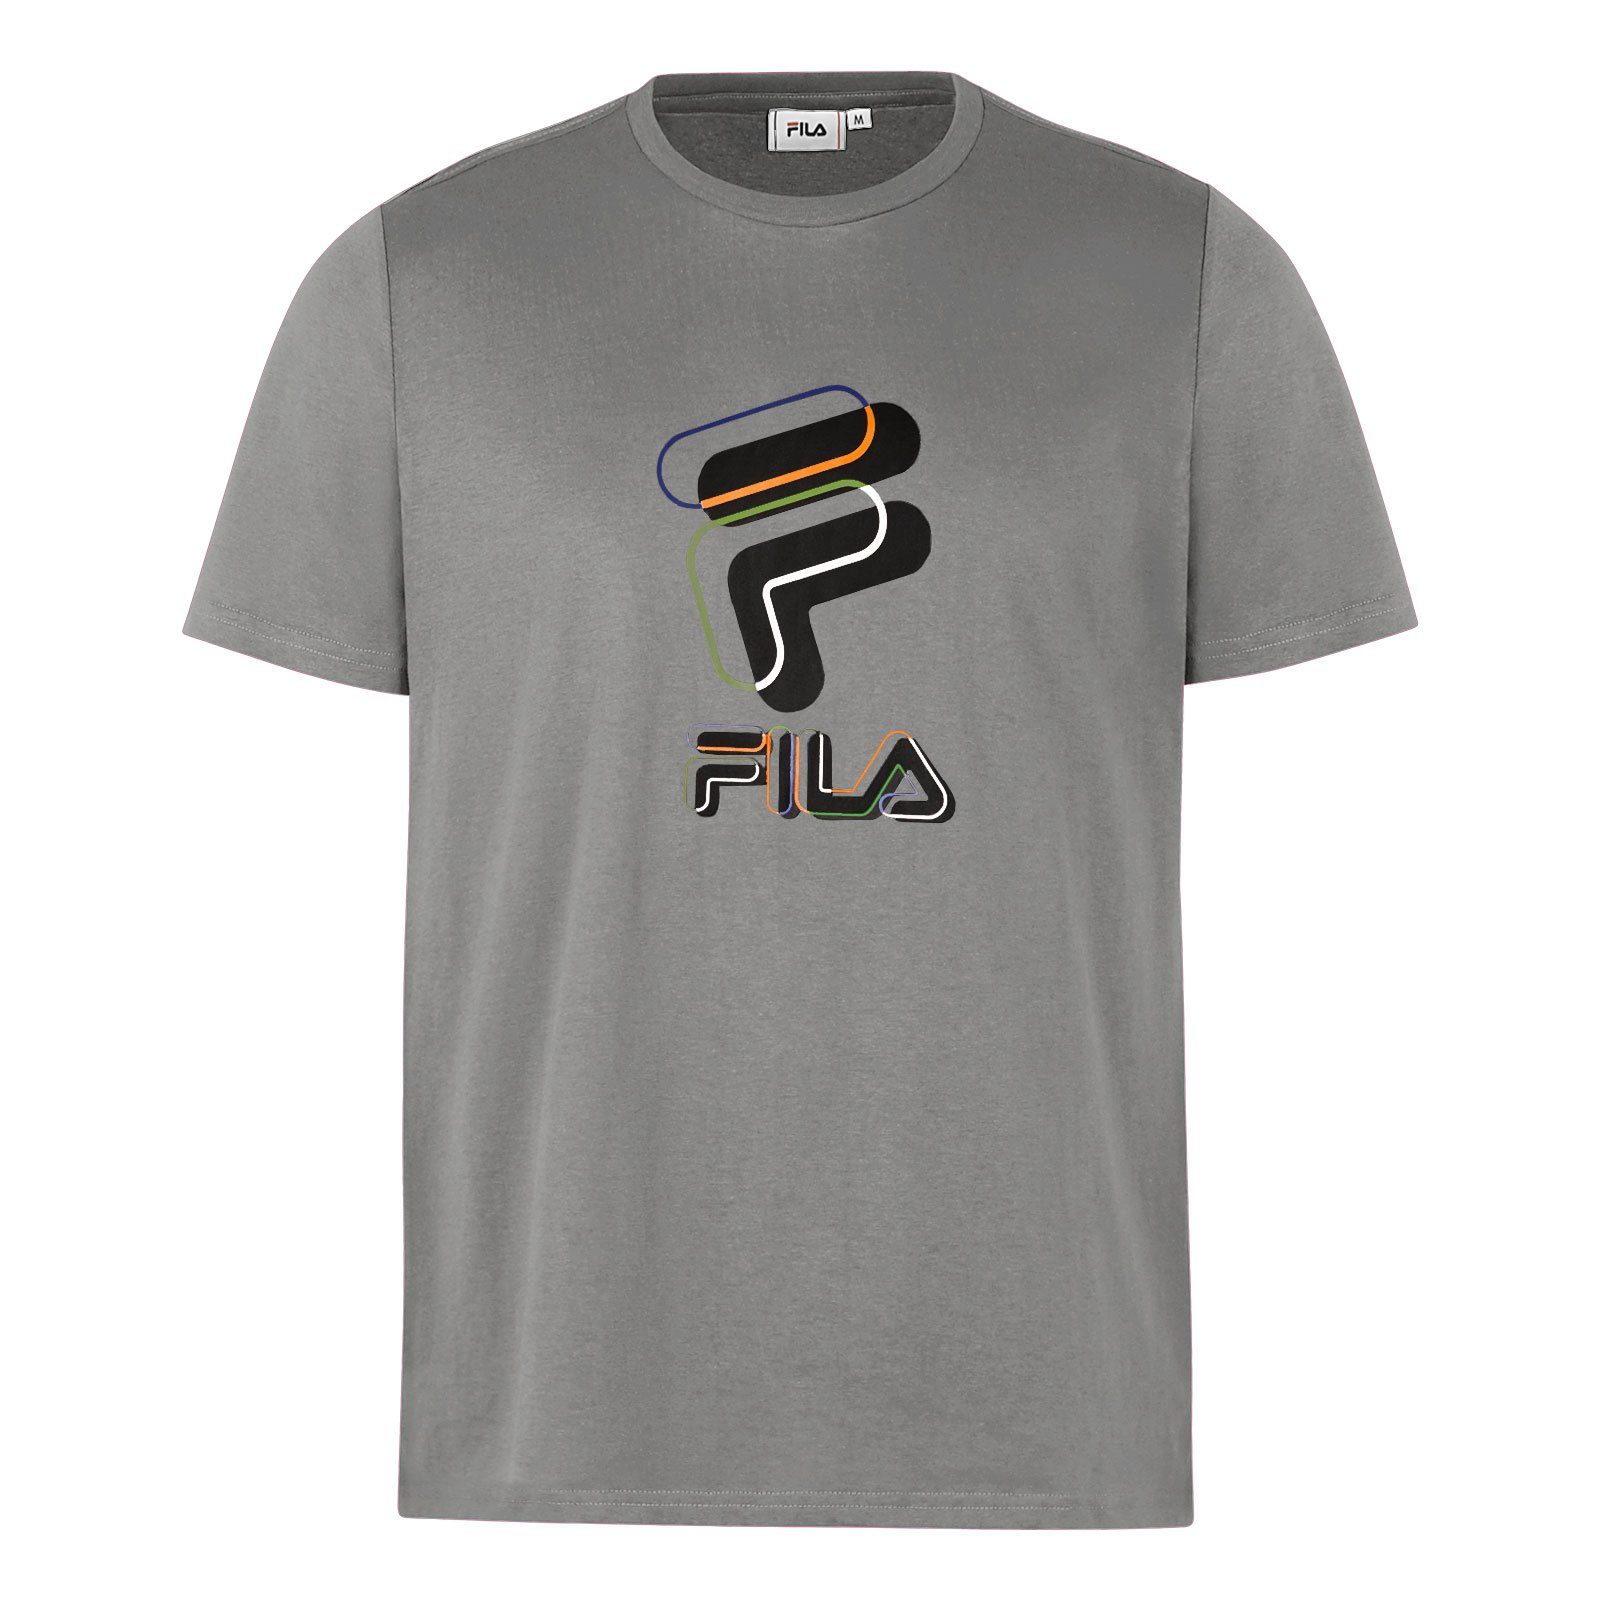 Fila T-Shirt Bibbiena Tee mit stylischem Outline-FILA-Logo 80028 gull